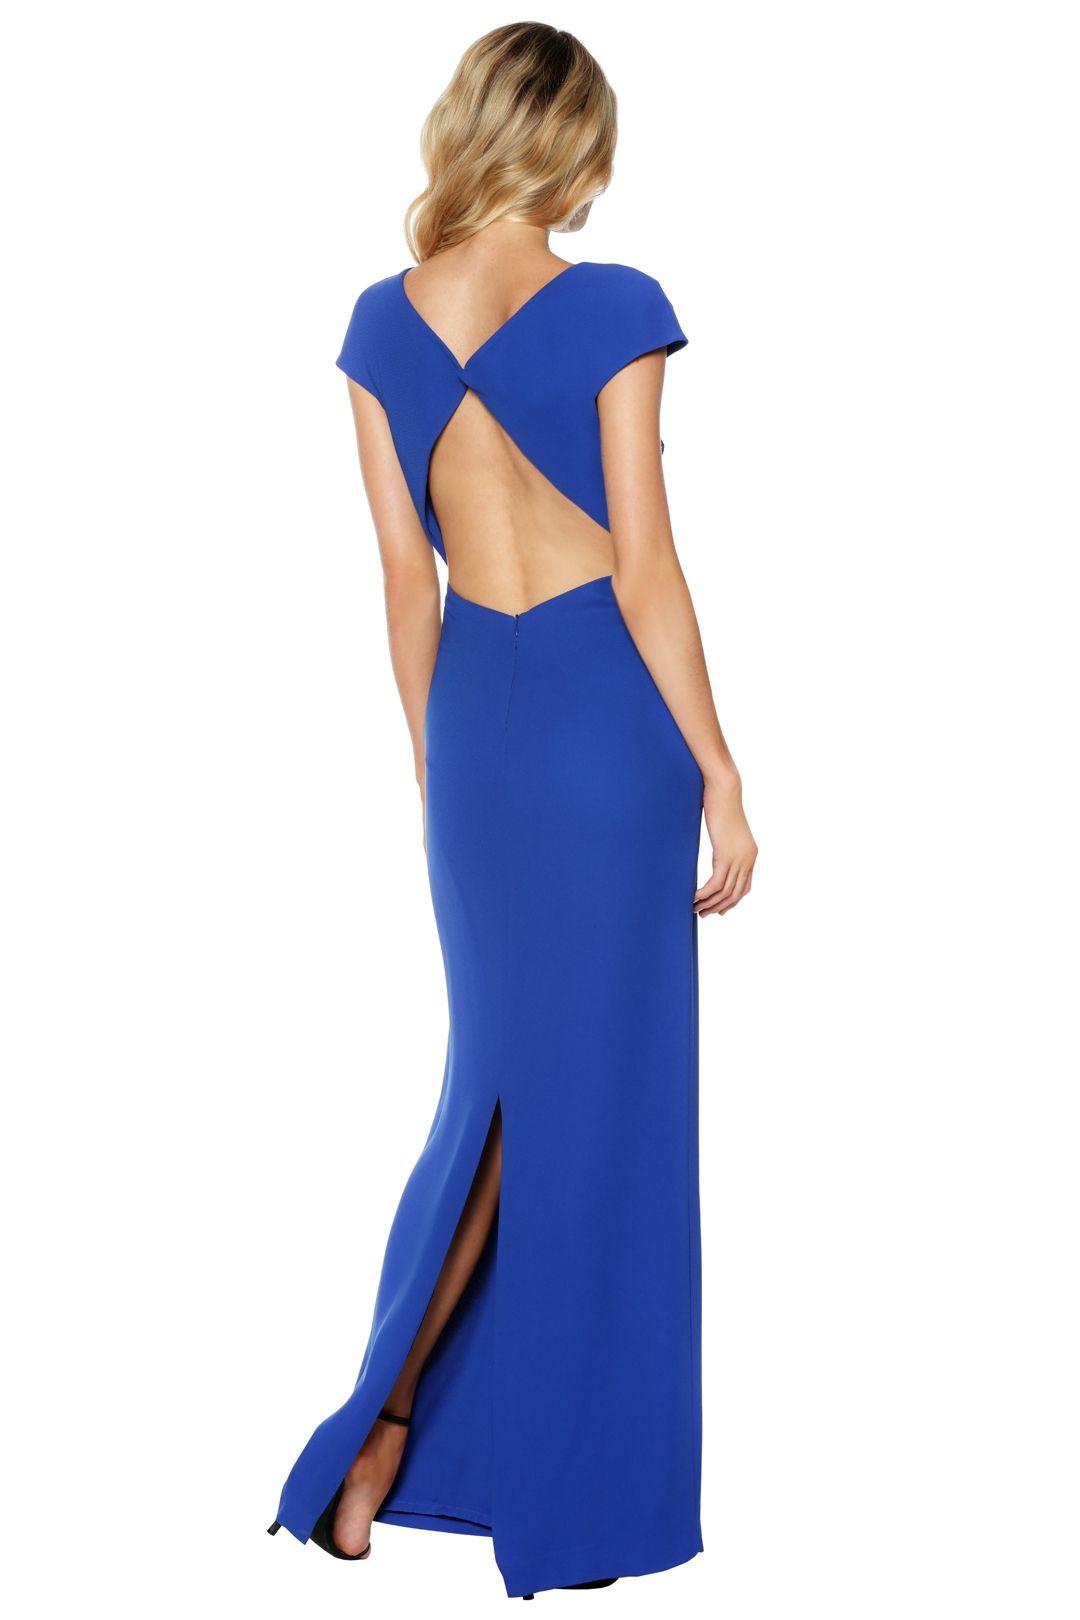 Carla Zampatti - Royal Diamond Cut Out Maxi Dress - Blue - Back